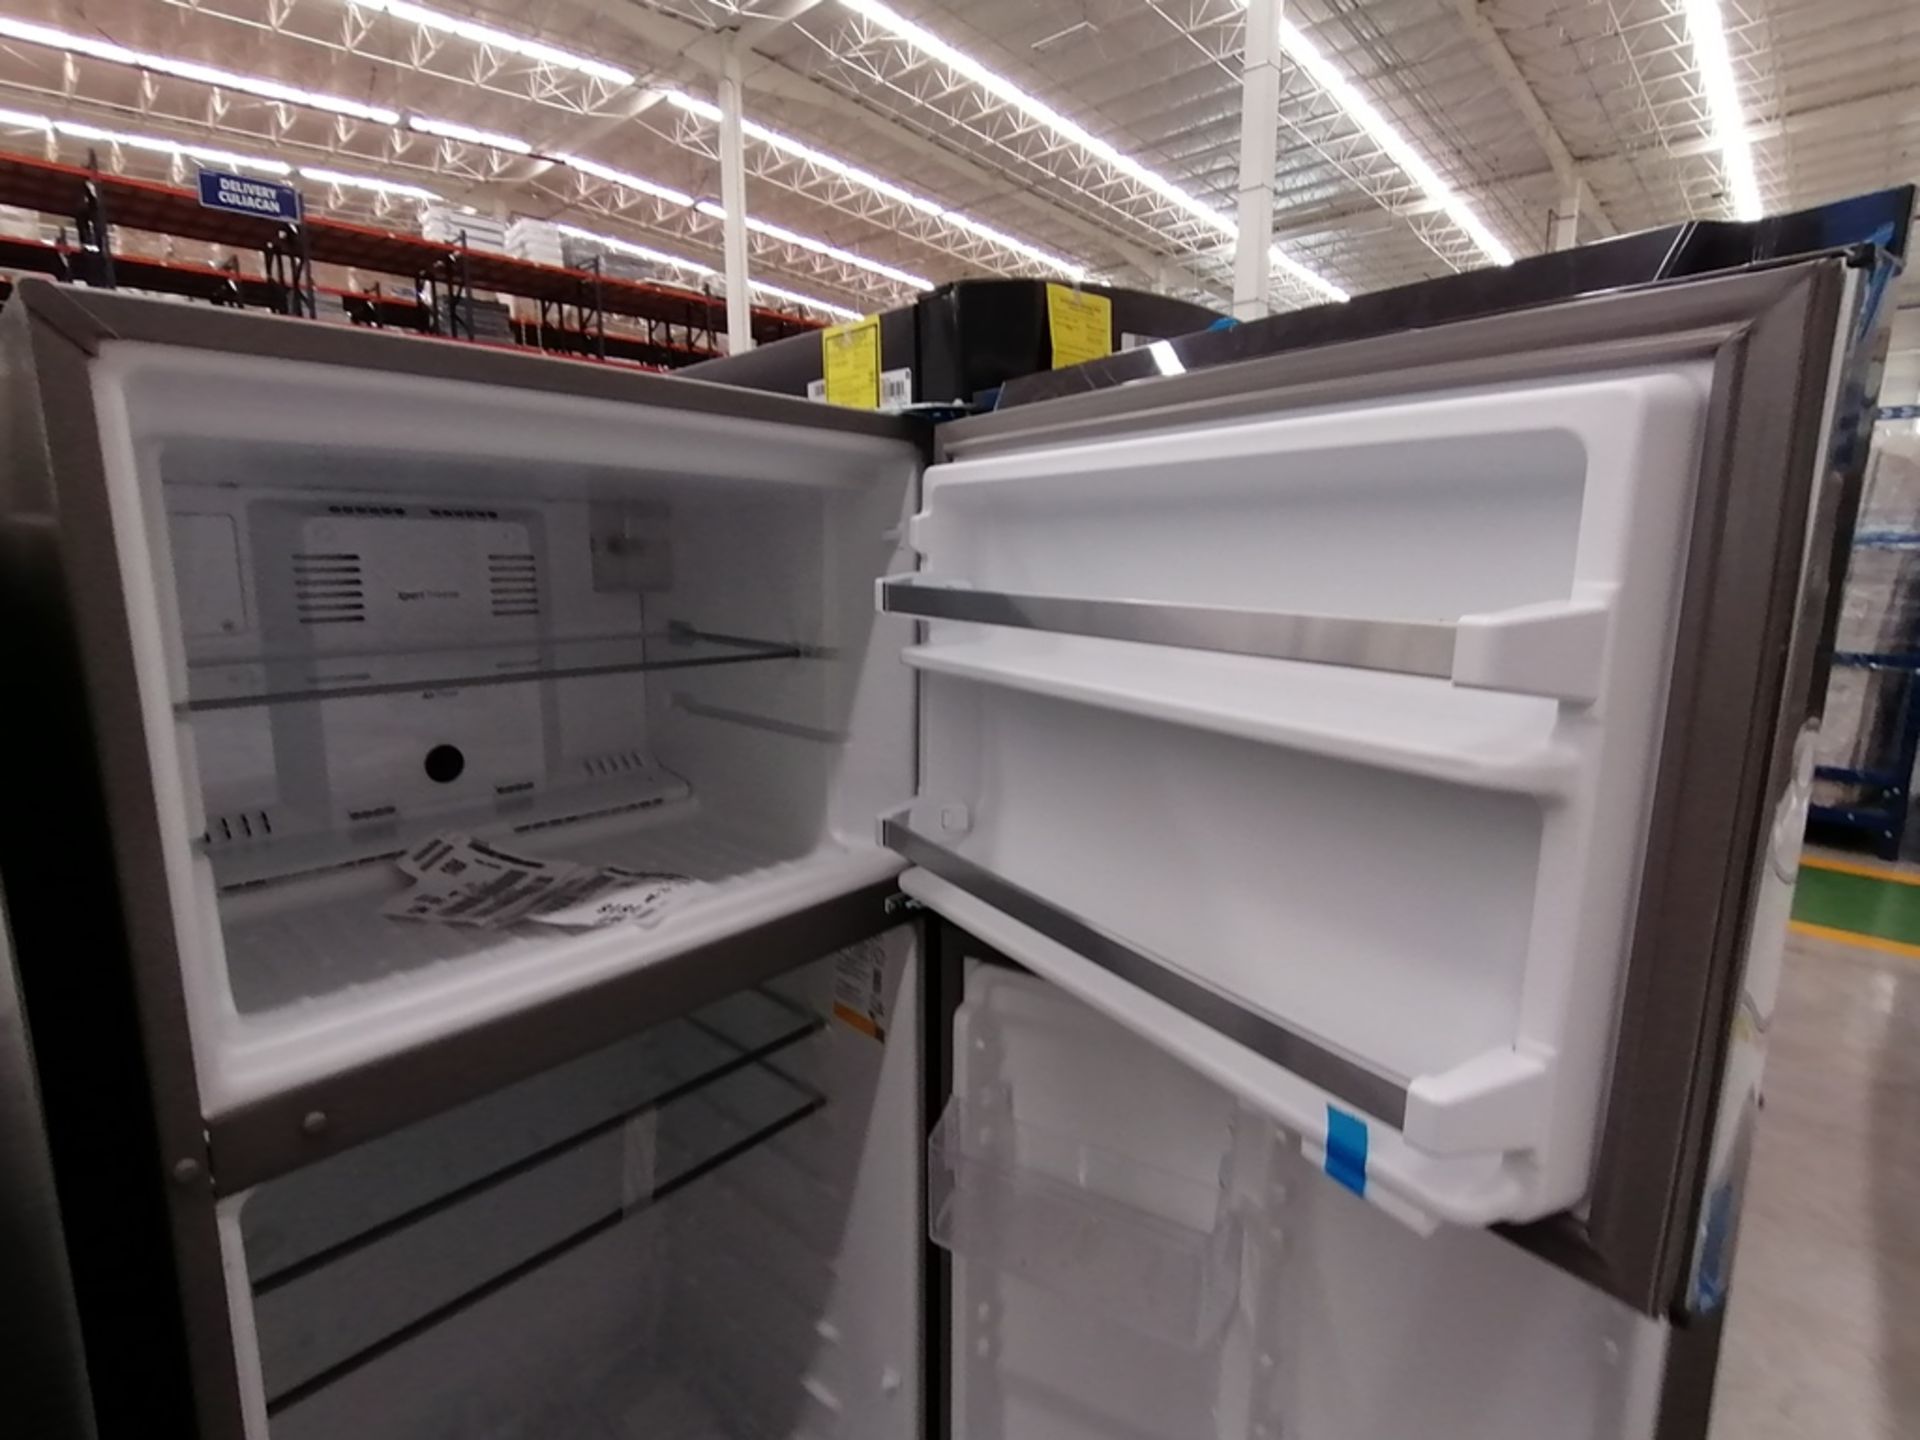 Lote de 2 refrigeradores incluye: 1 Refrigerador, Marca Samsung, Modelo RT29K500JS8, Serie 0AZS4BAR - Image 13 of 15